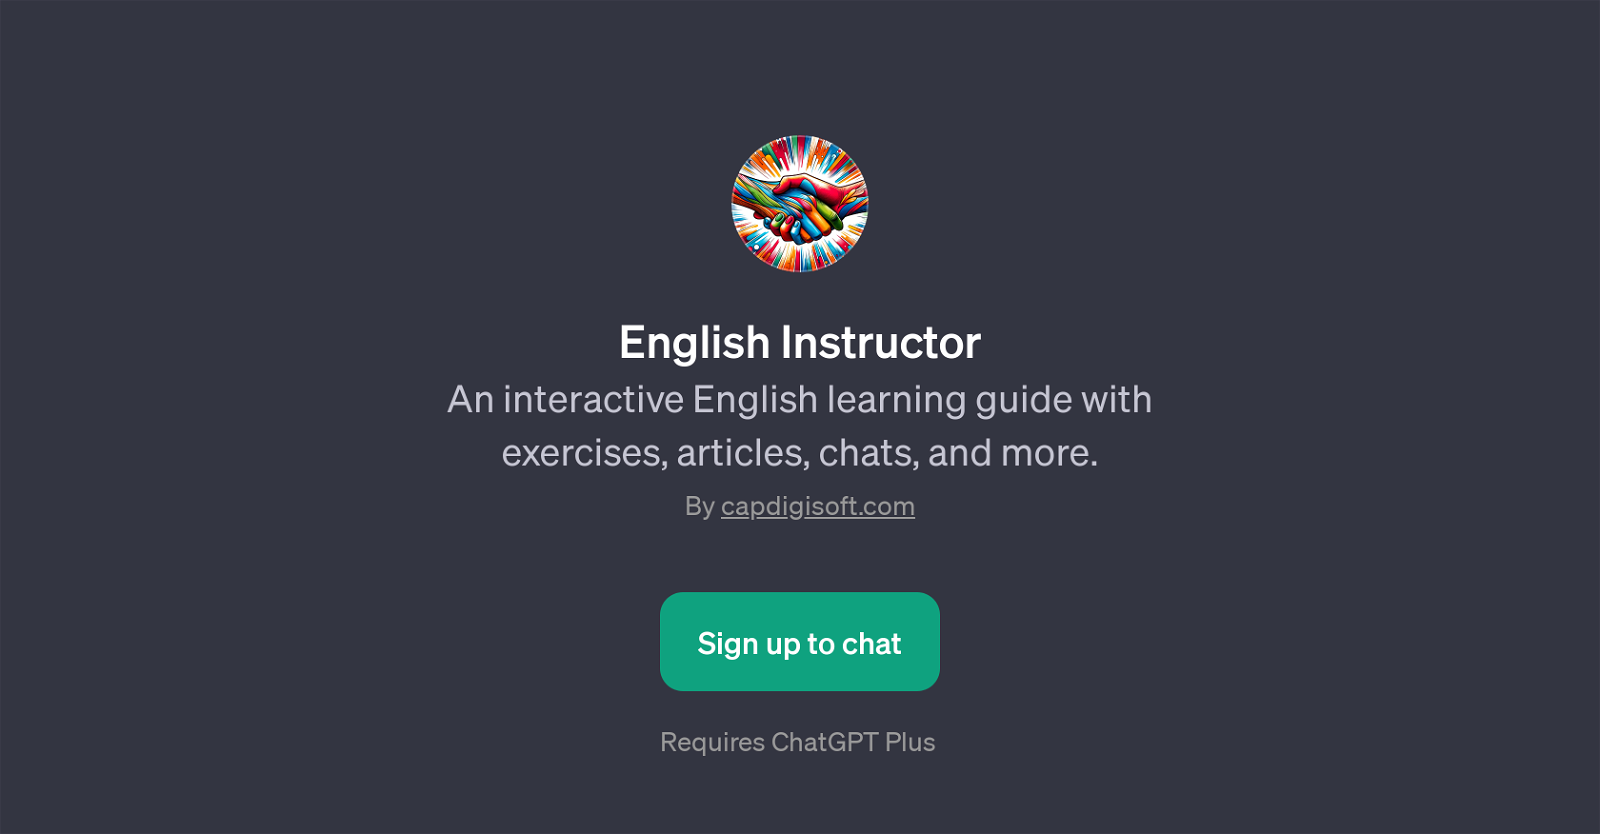 English Instructor website